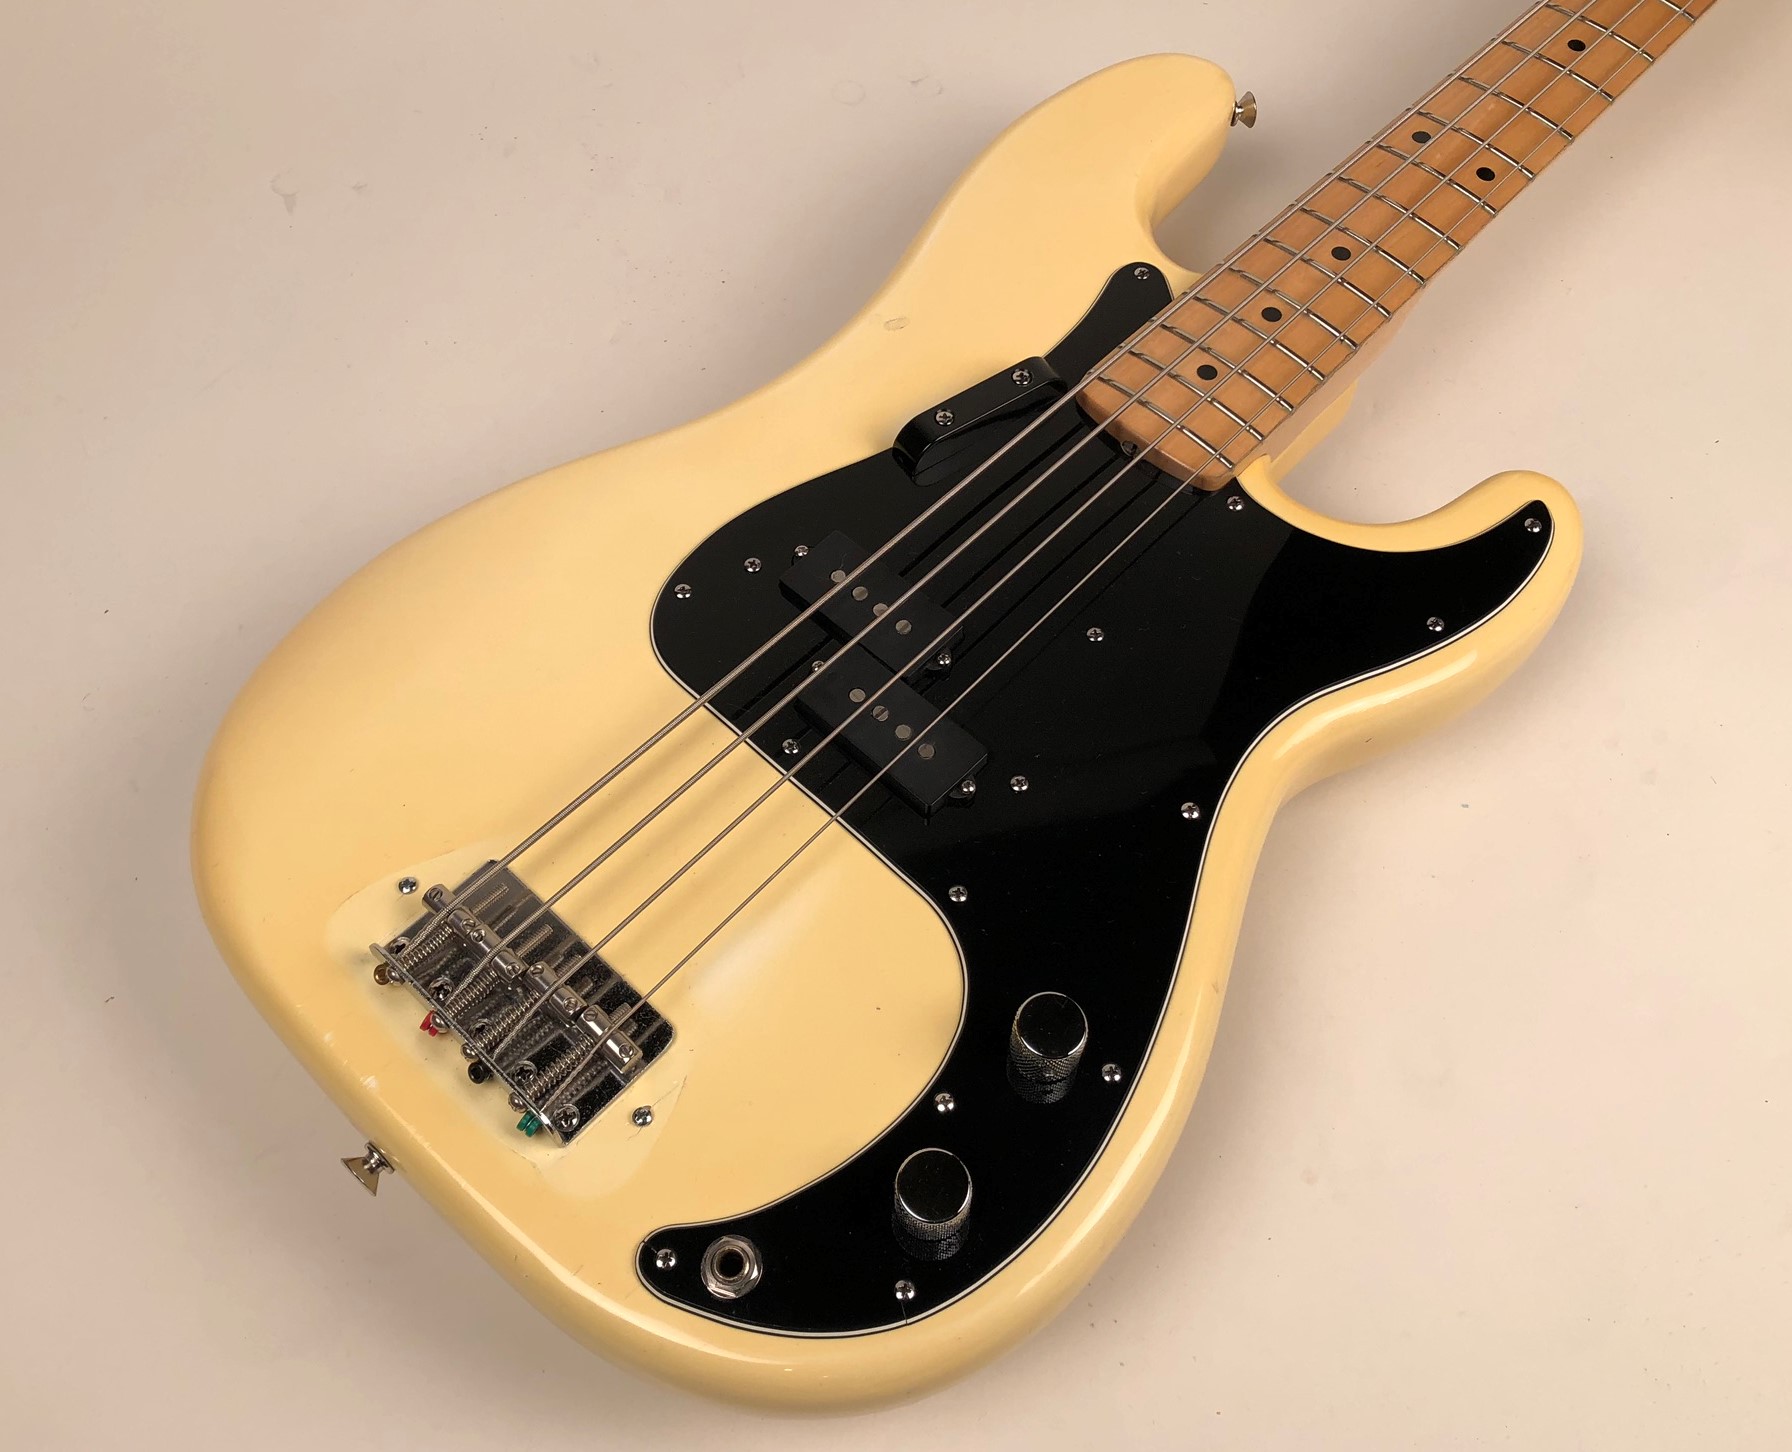 Møntvask essens undskyld Fender Precision Bass 1978 Olympic White Bass For Sale Guitars West